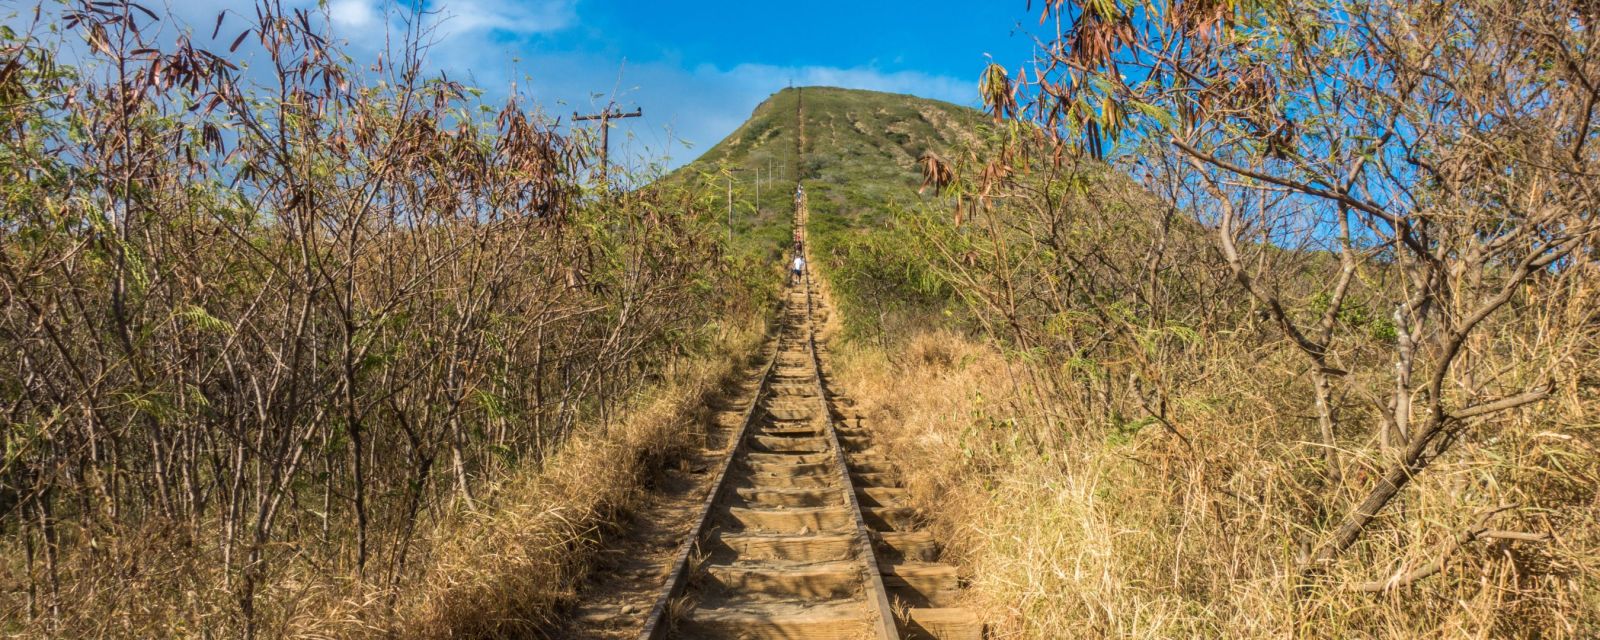 Koko Head Crater Hike – Tips for the Railway Trail in Oahu Hawaii